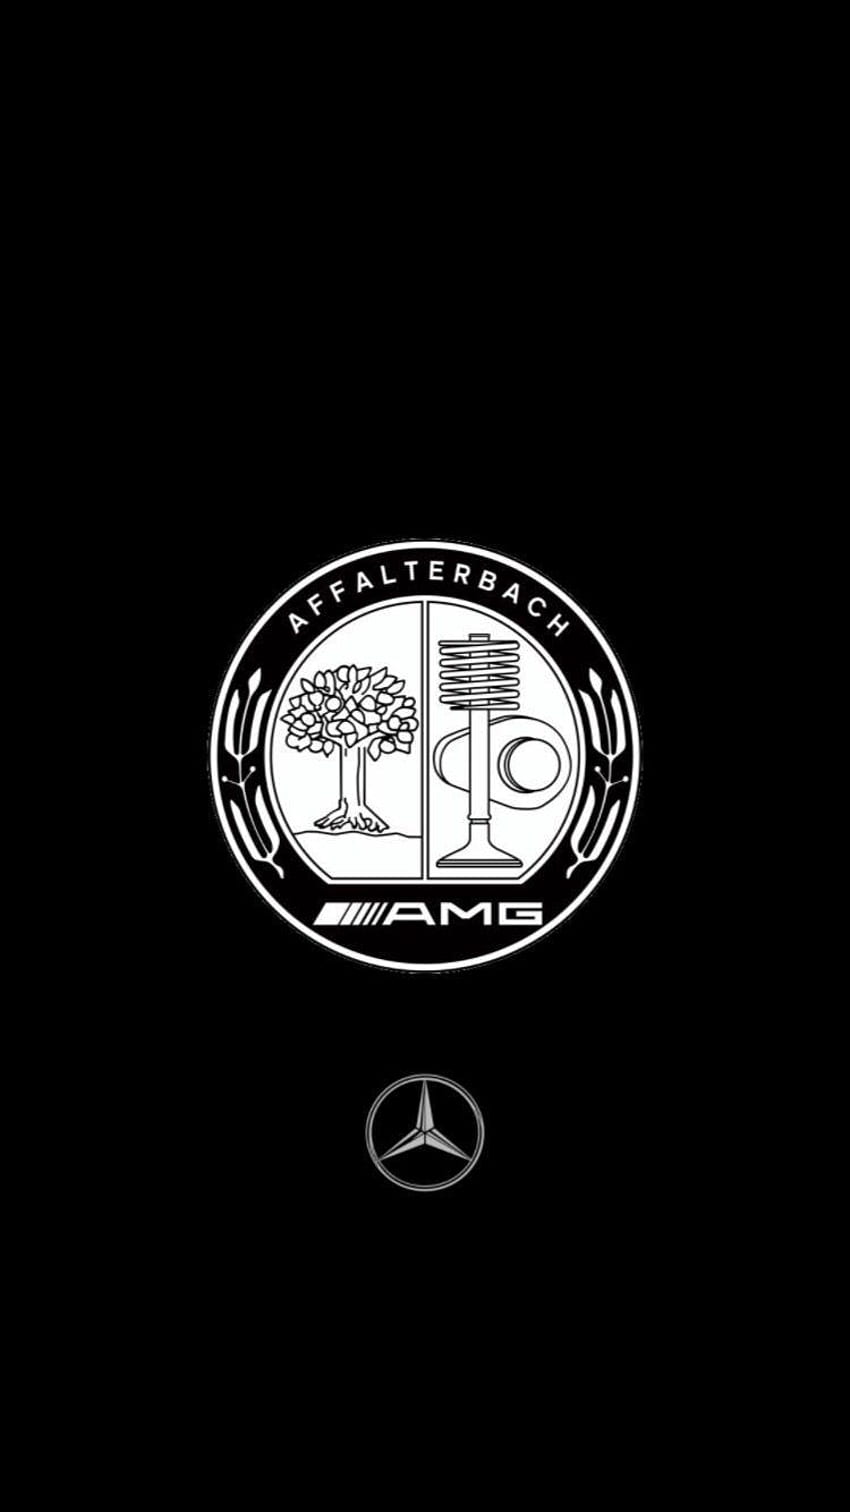 Initial letters AMG logo designs Bundle 4916856 Vector Art at Vecteezy